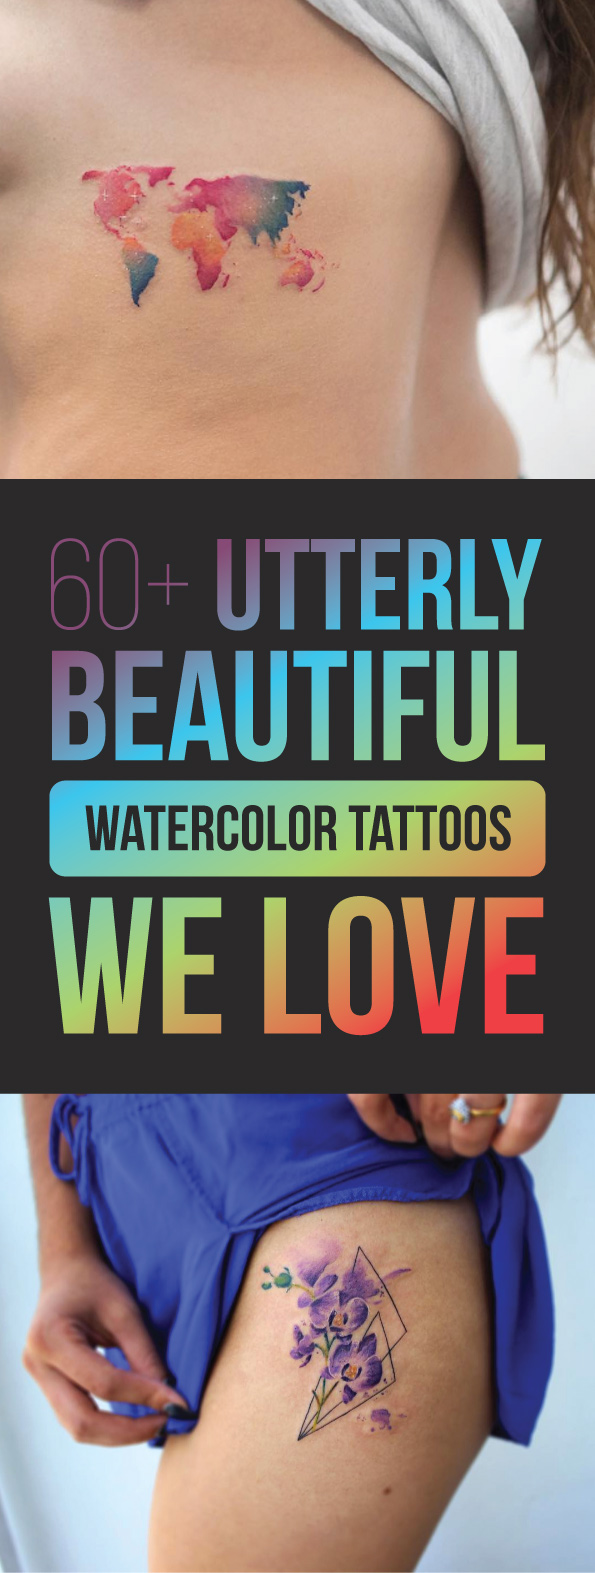 60+ Utterly Beautiful Watercolor Tattoos We Love | TattooBlend